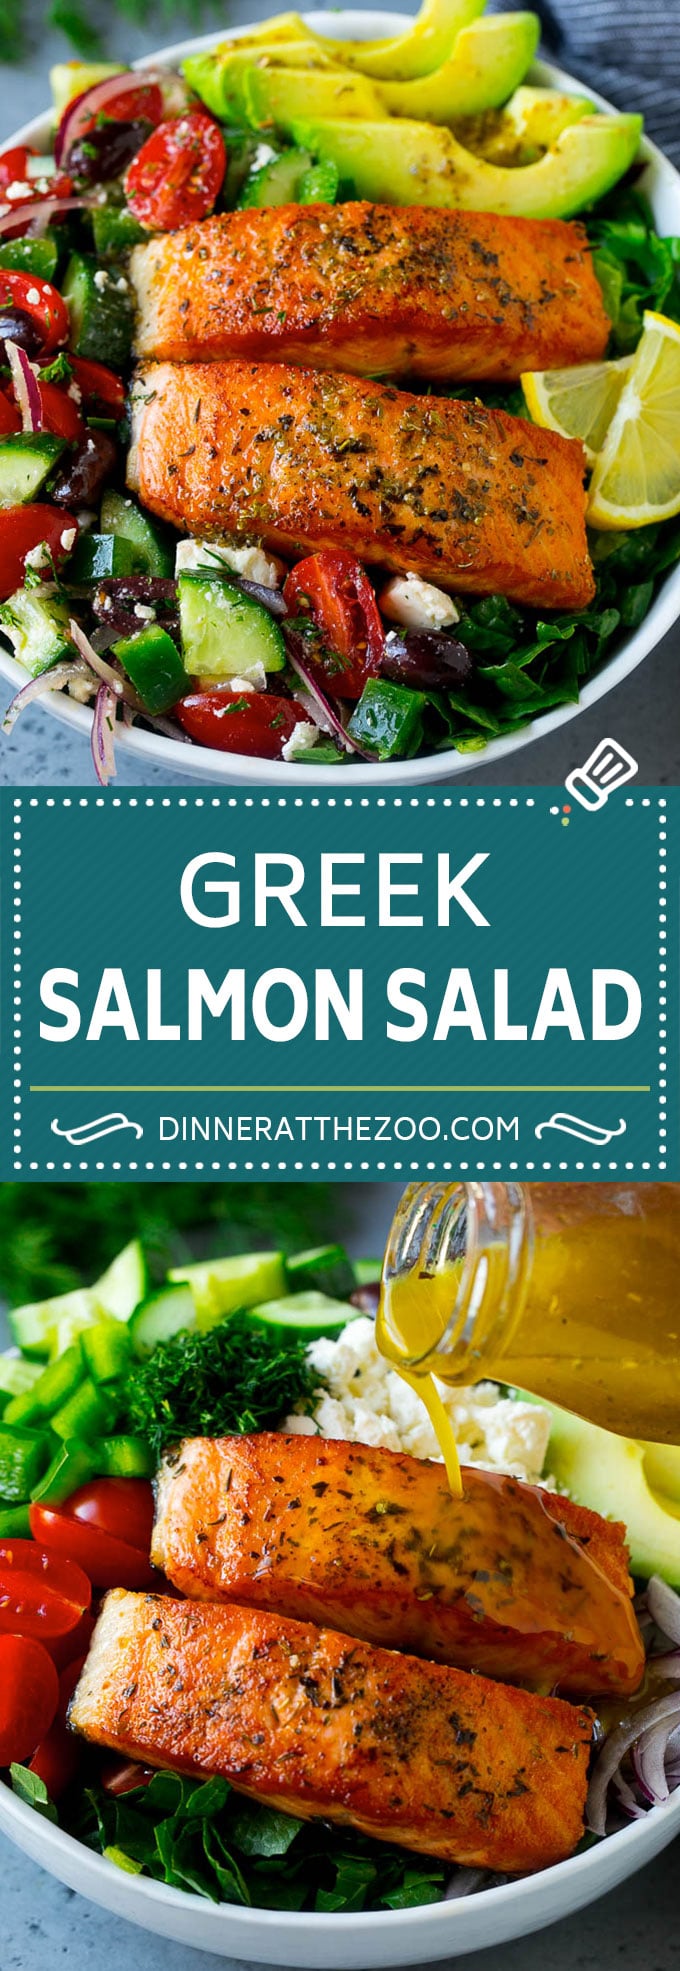 Greek Salmon Salad Recipe | Low Carb Salmon Recipe | Salmon Salad #salmon #seafood #fish #lowcarb #keto #lunch #dinneratthezoo #healthy